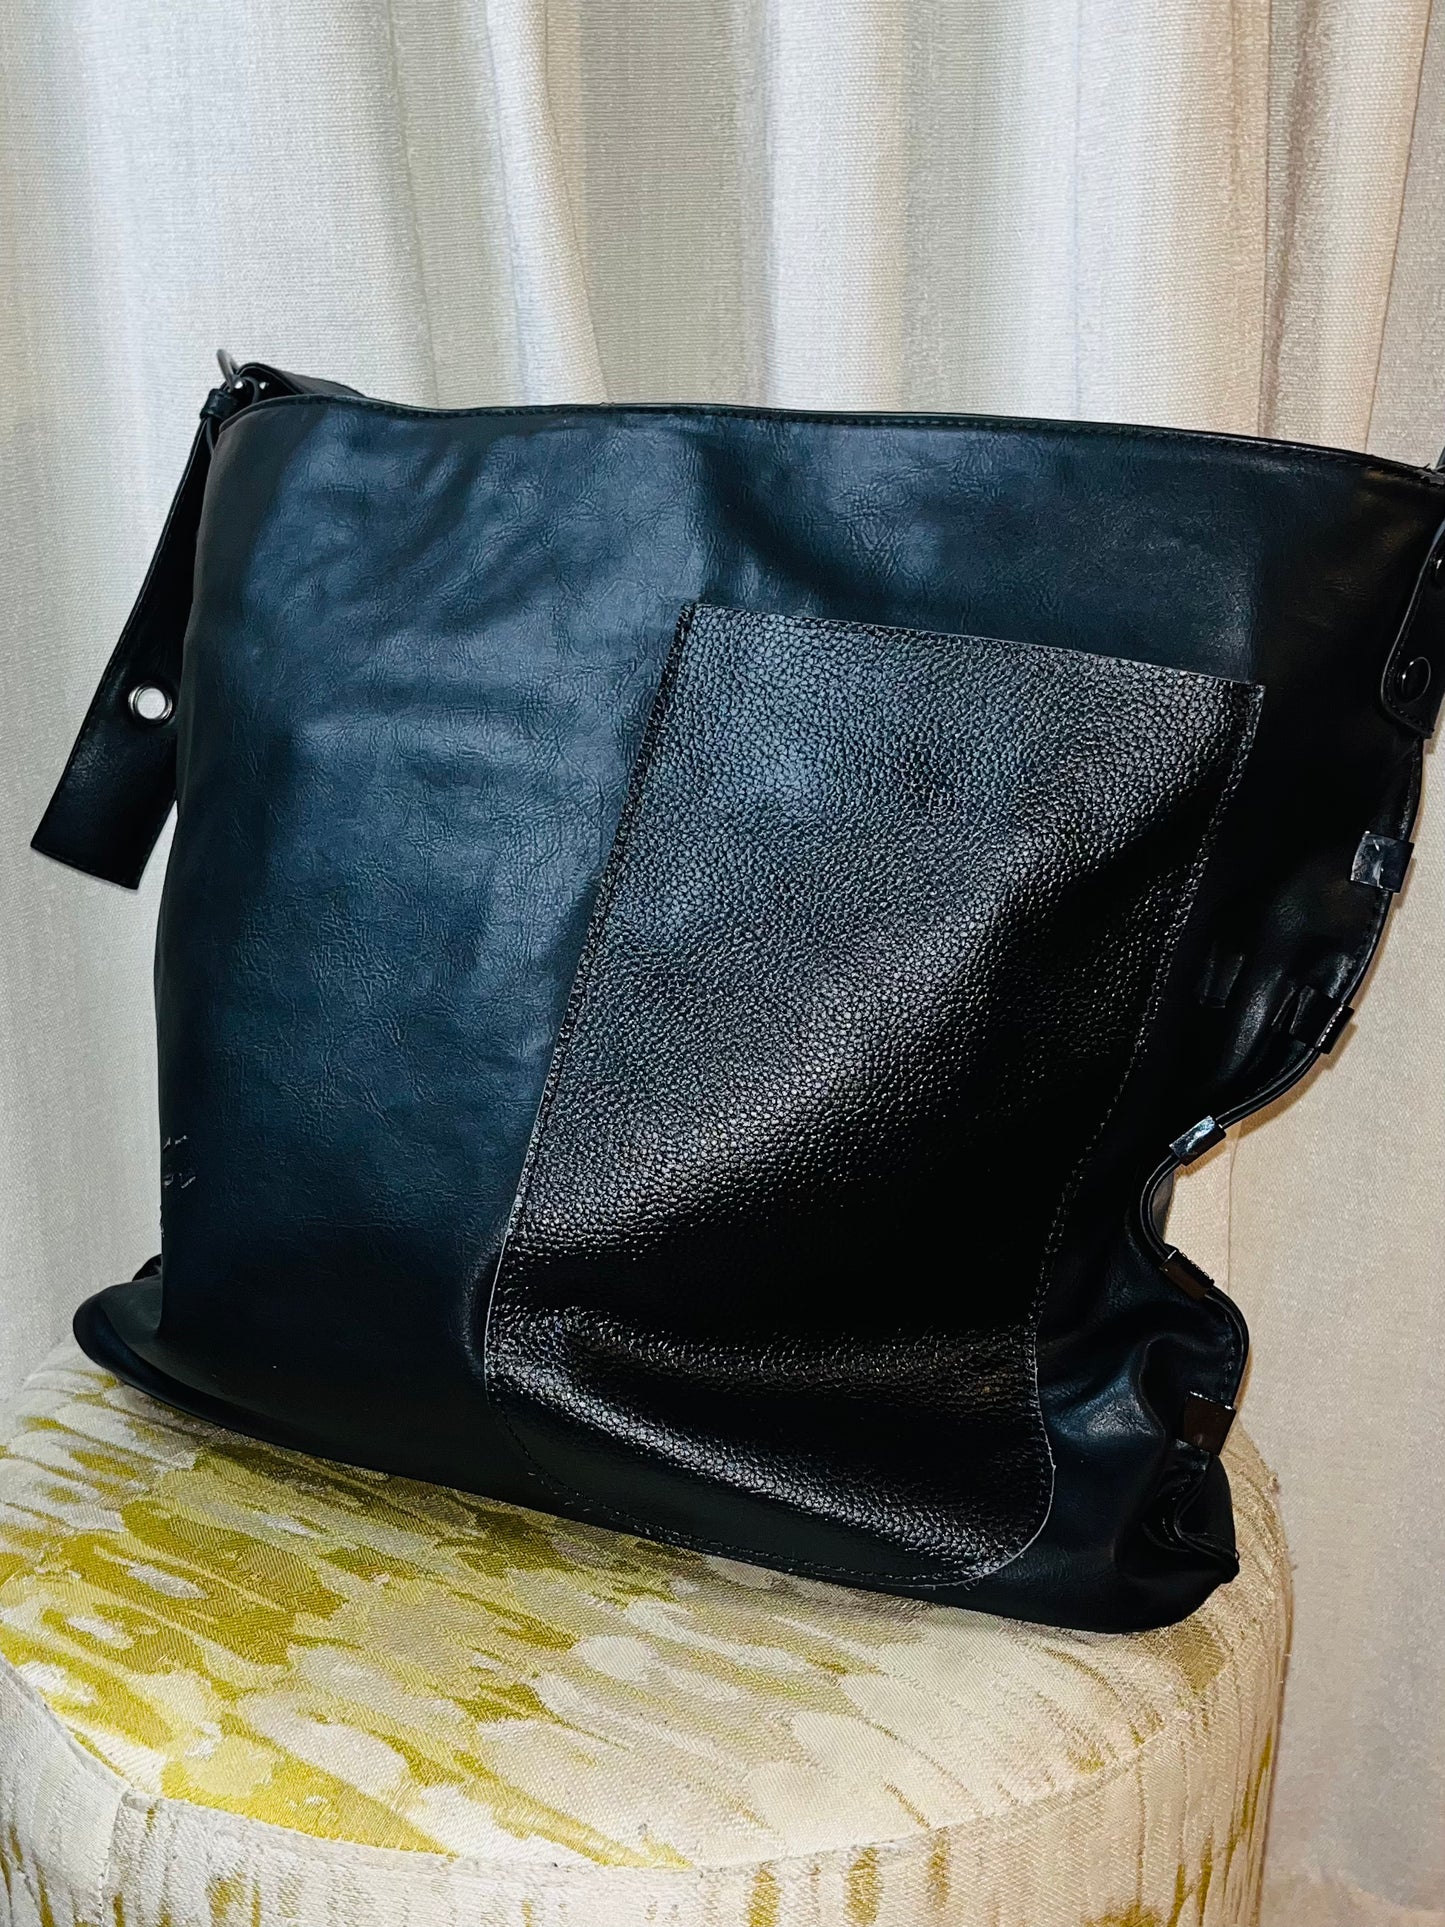 HB461SS Faux Tan Leather Textured shoulder bag